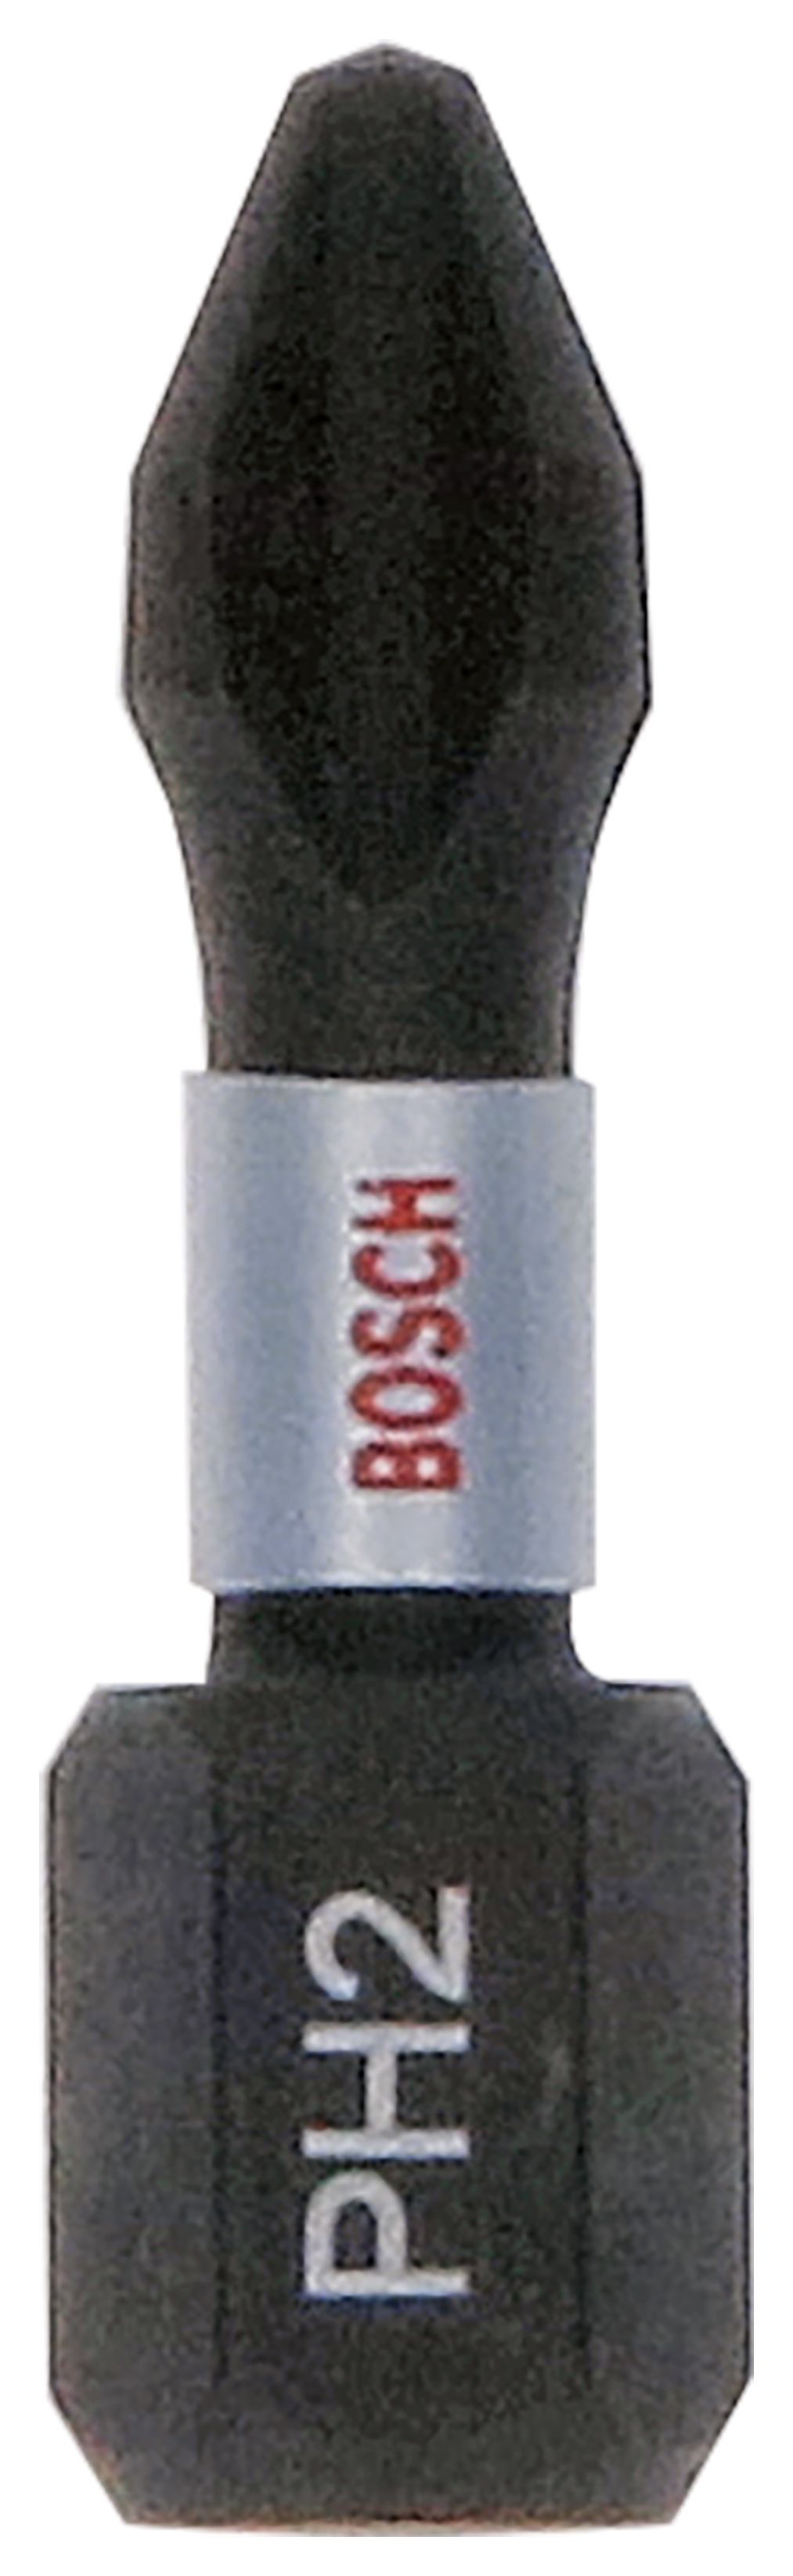 Bosch 2607002803 PH2 25 Piece Impact Control TicTac Box